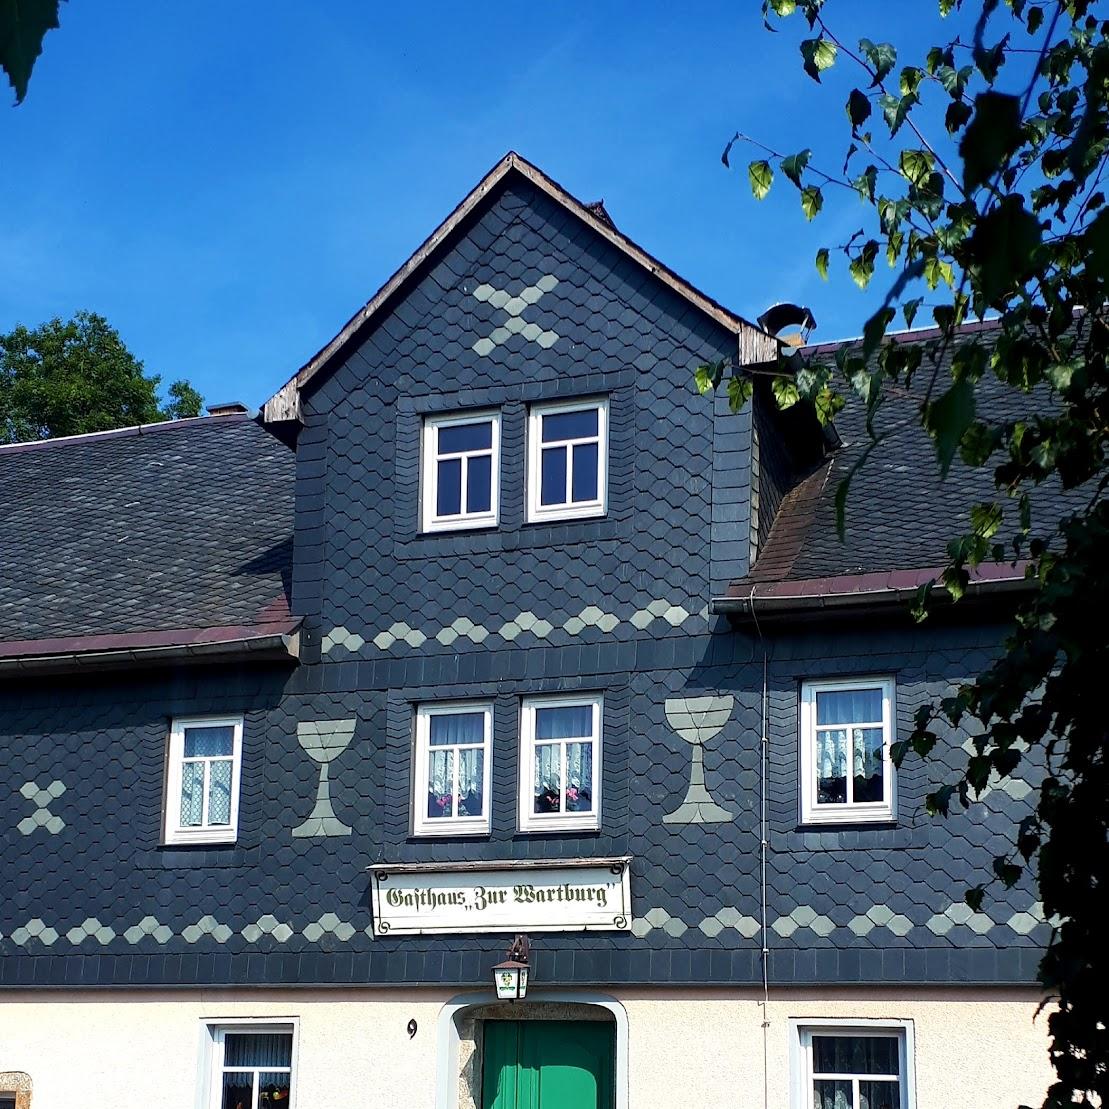 Restaurant "Gaststätte Wartburg - Gisela Anders" in Rammenau